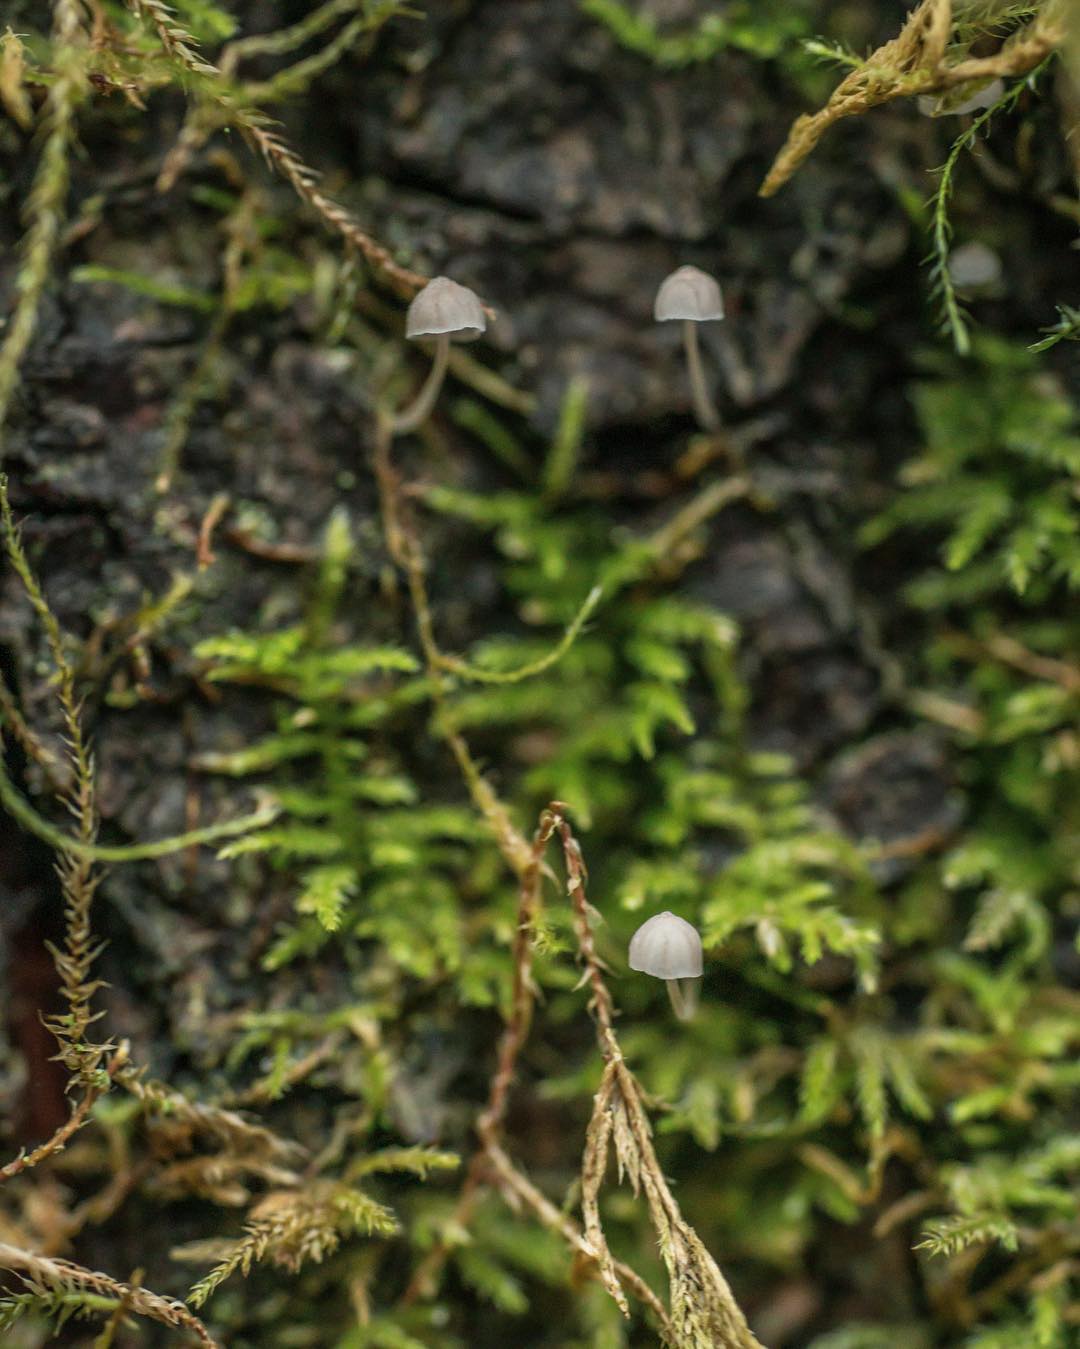 Three small mushroom caps in grey hanging onto ivy